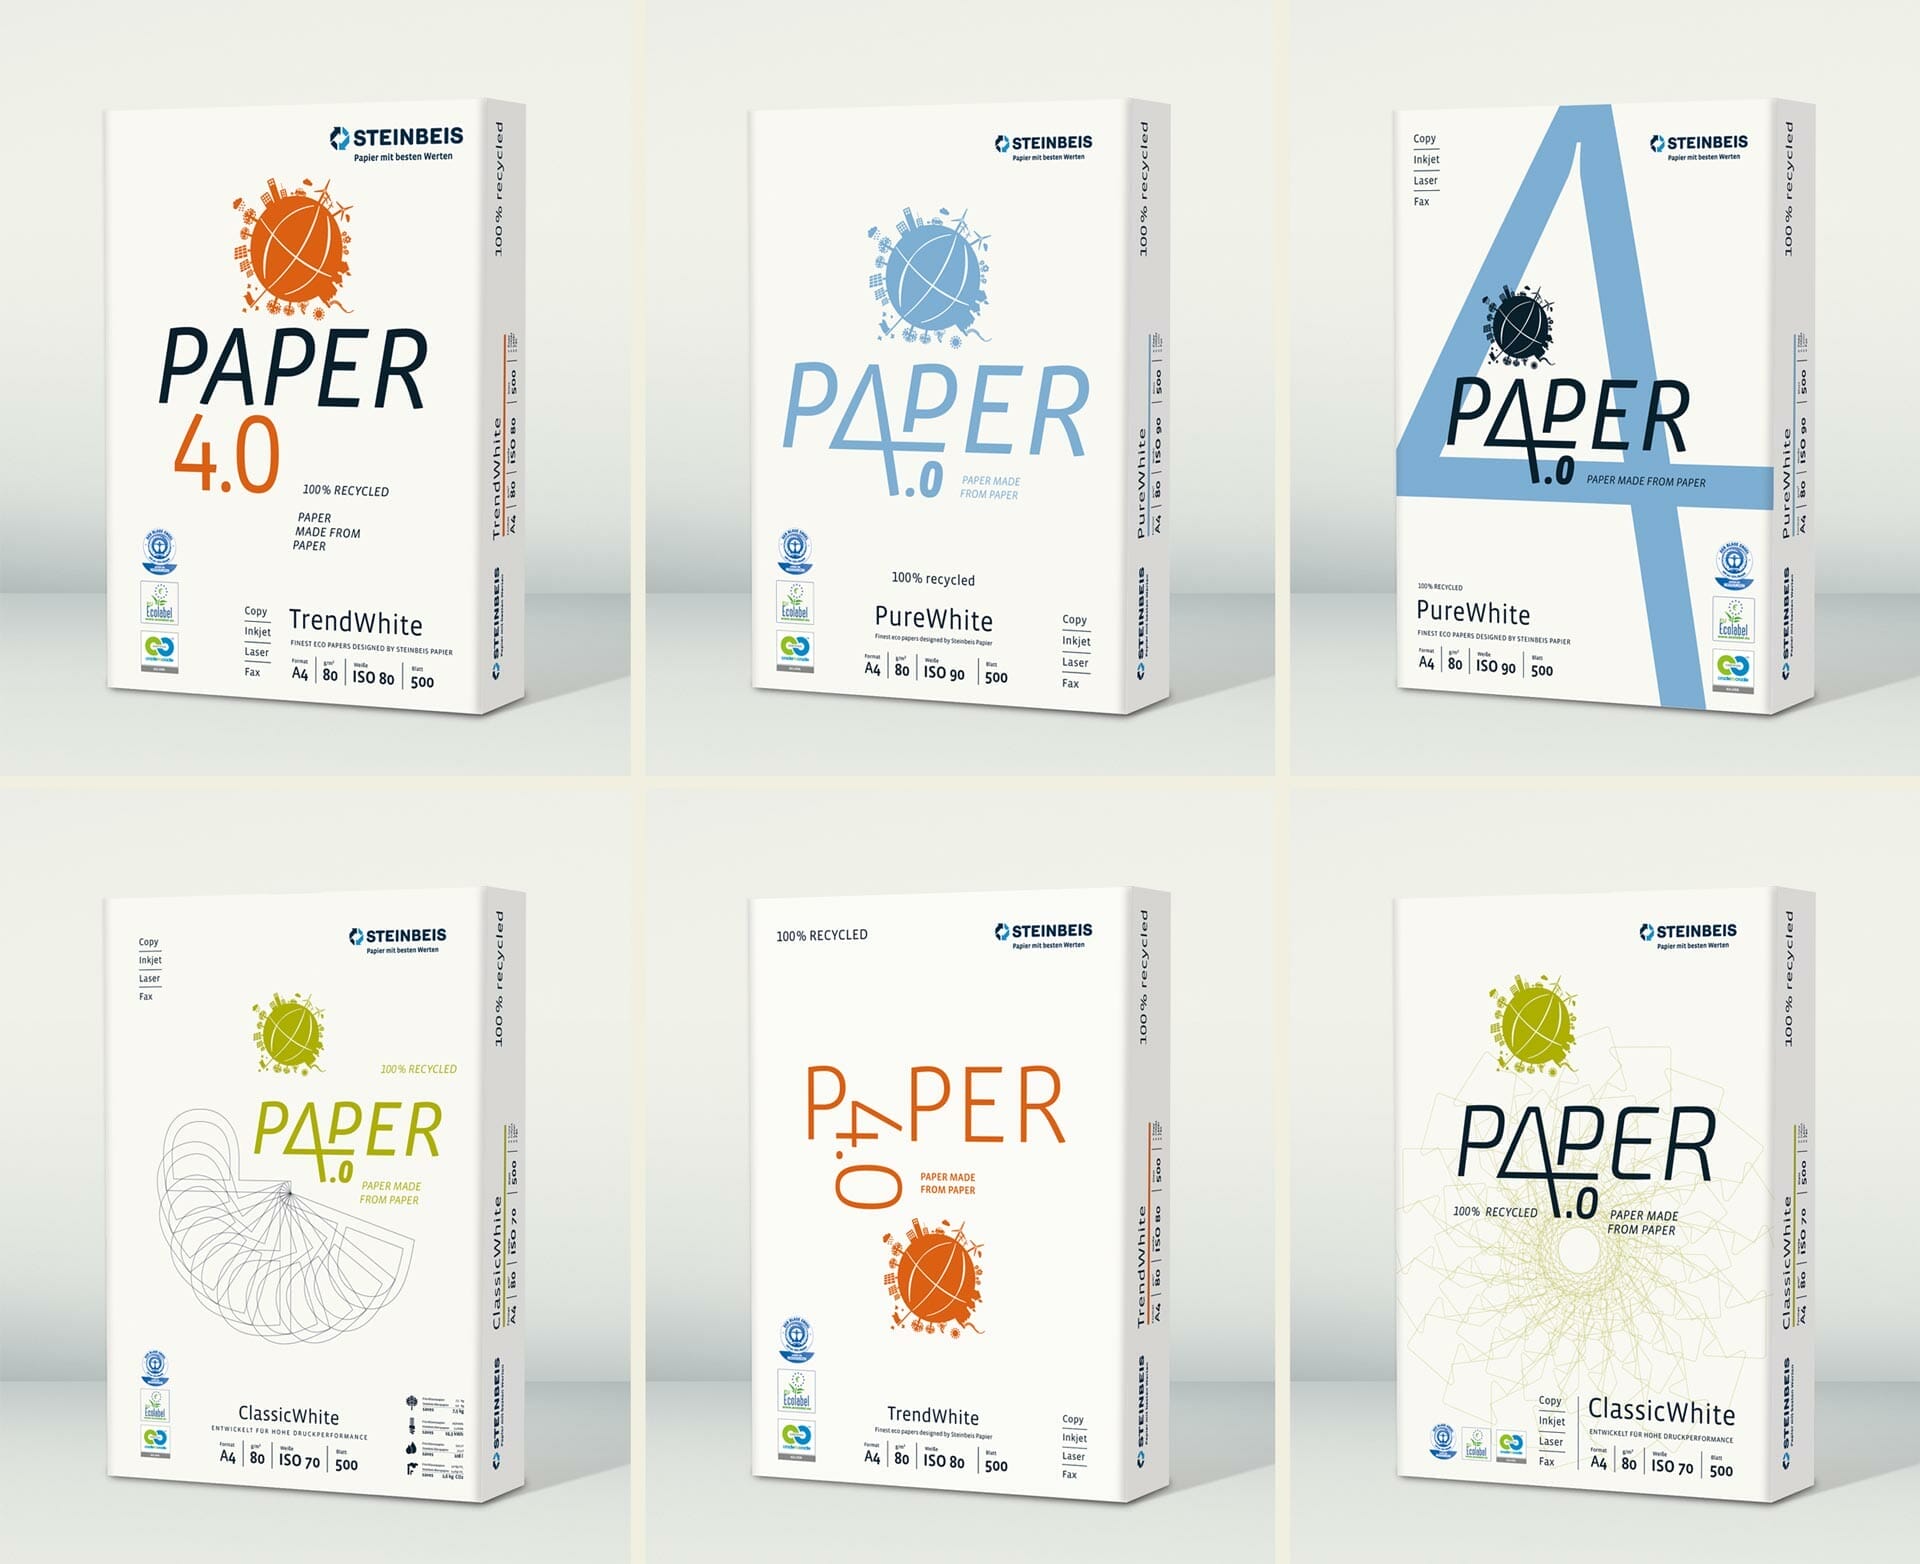 Steinbeis Papier Packaging Redesign 2015 rejected